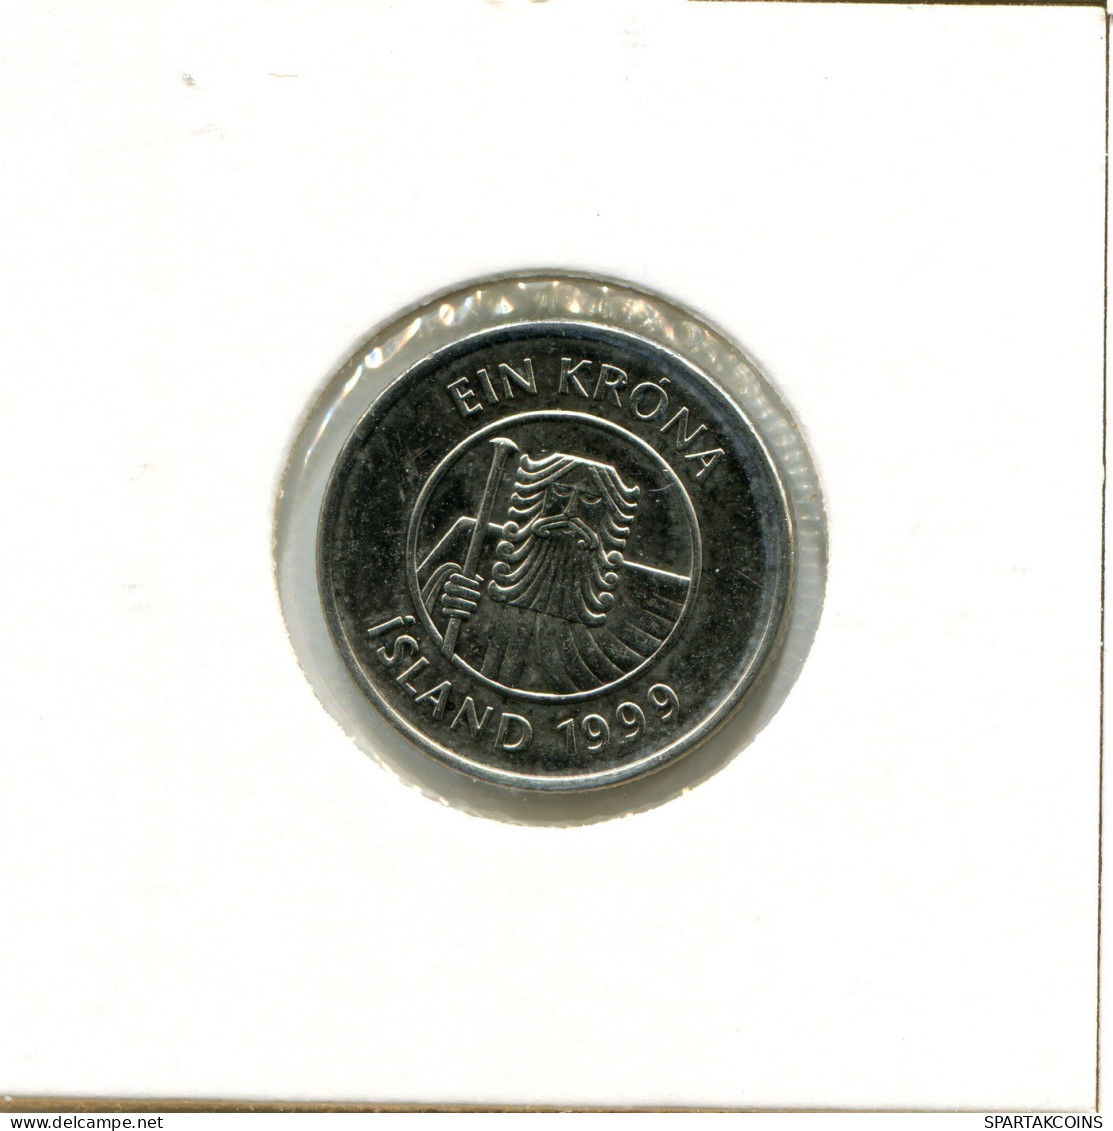 1 KRONA 1999 ICELAND Coin #AX772.U.A - Iceland